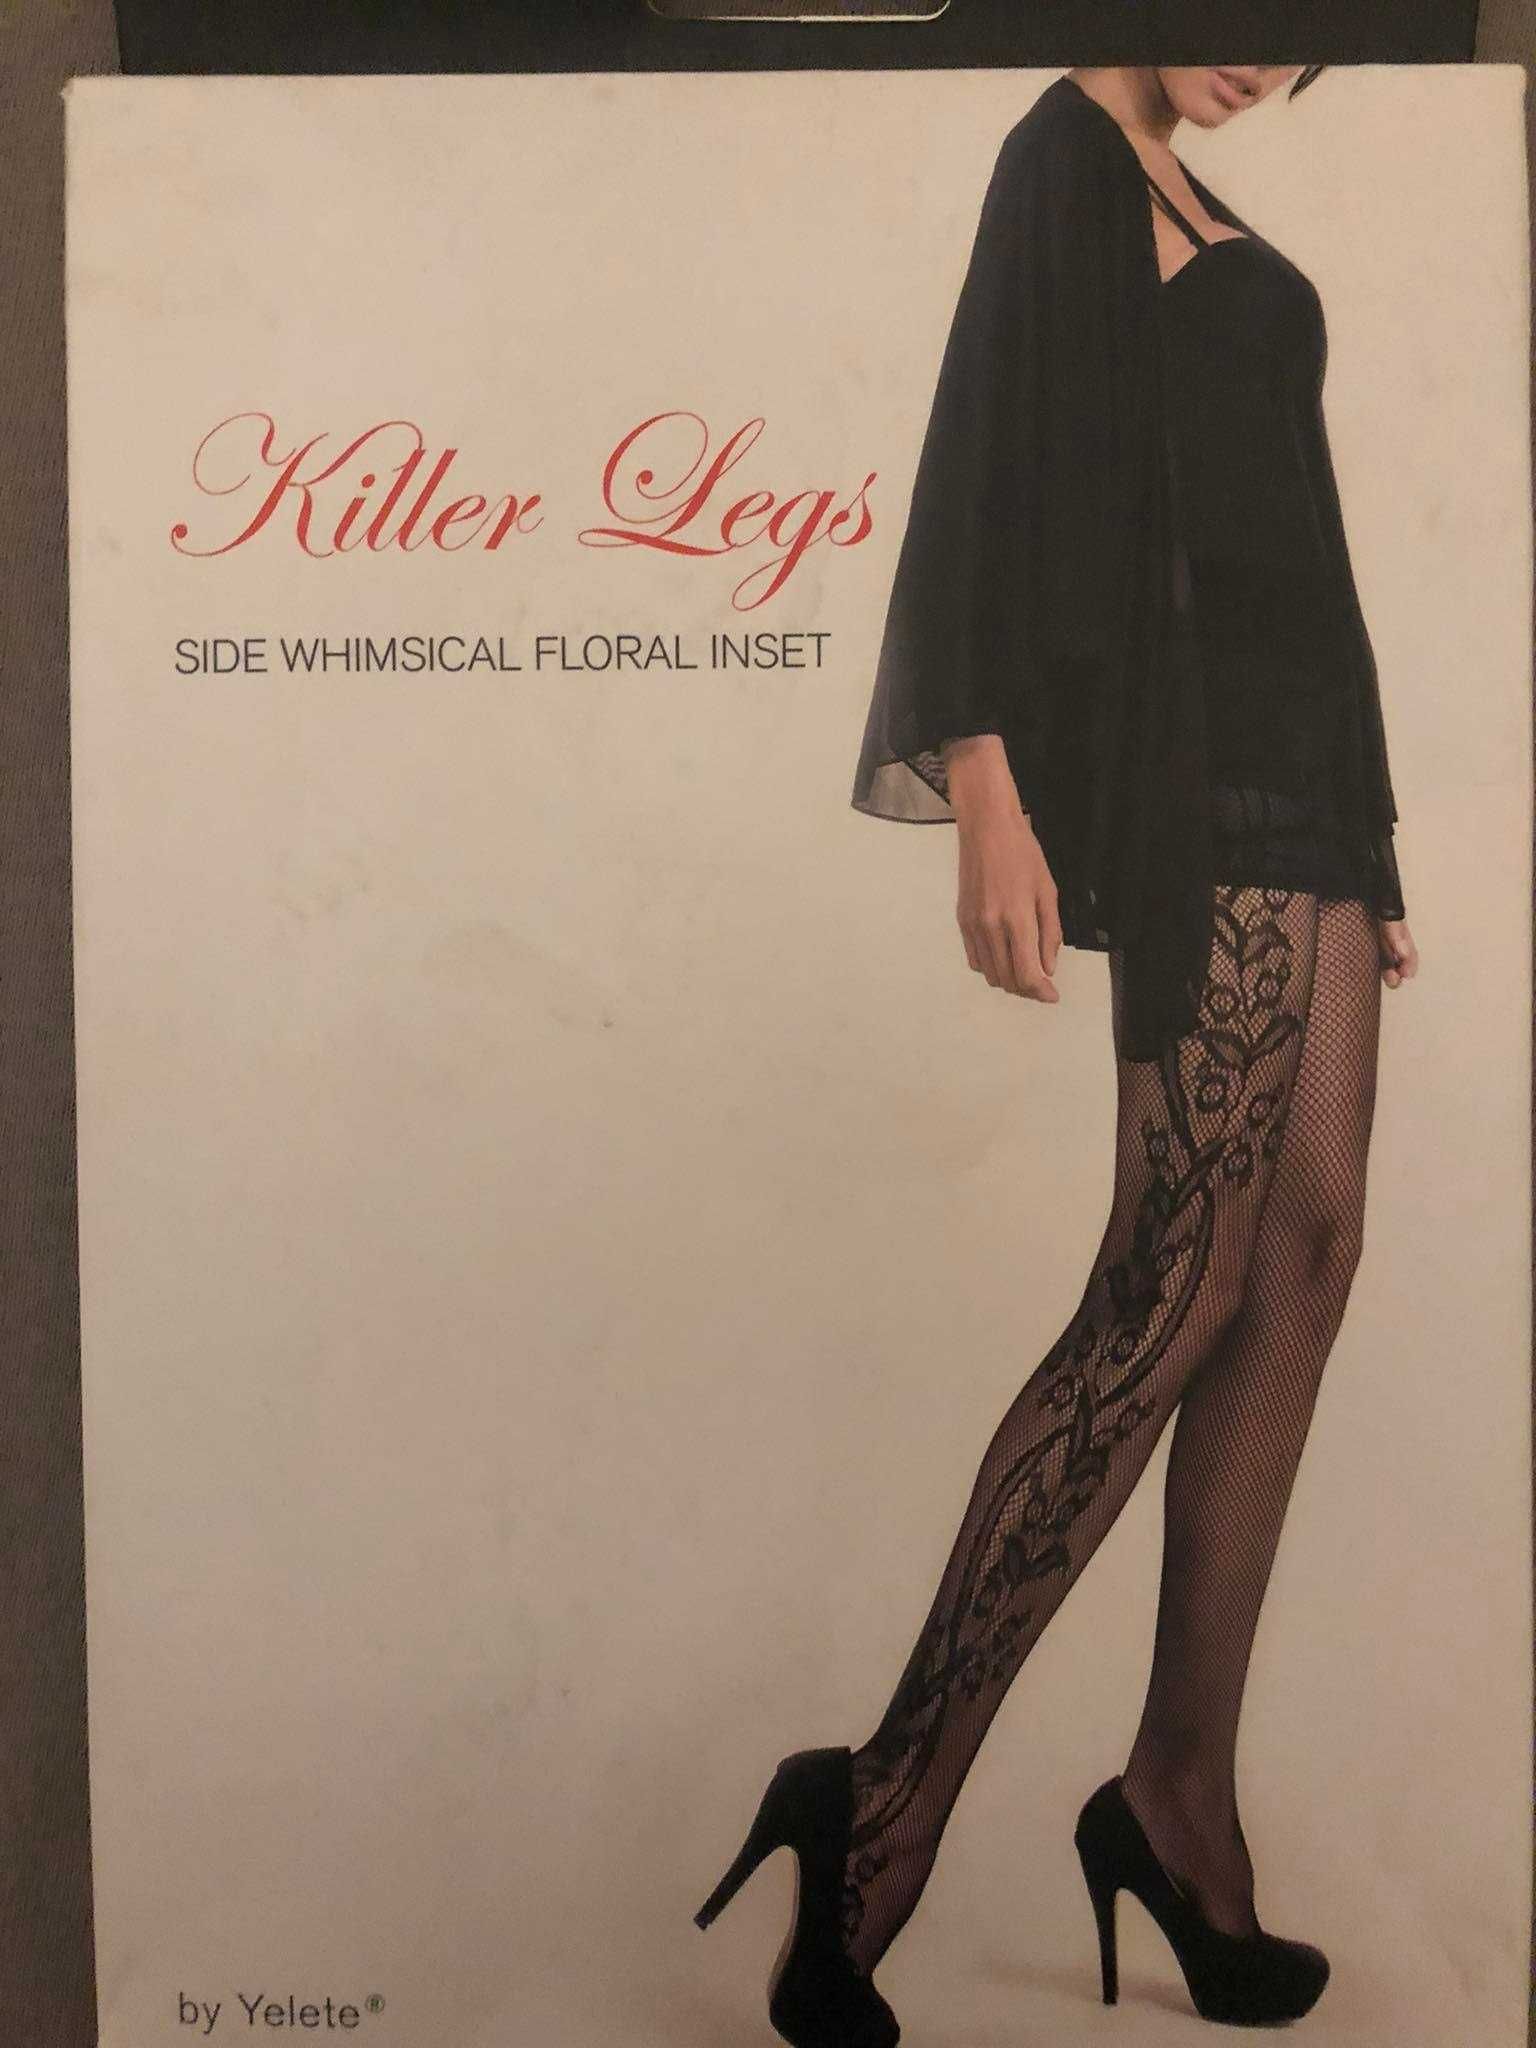 Yelete Killer Legs damskie rajstopy kabaretki marki premium